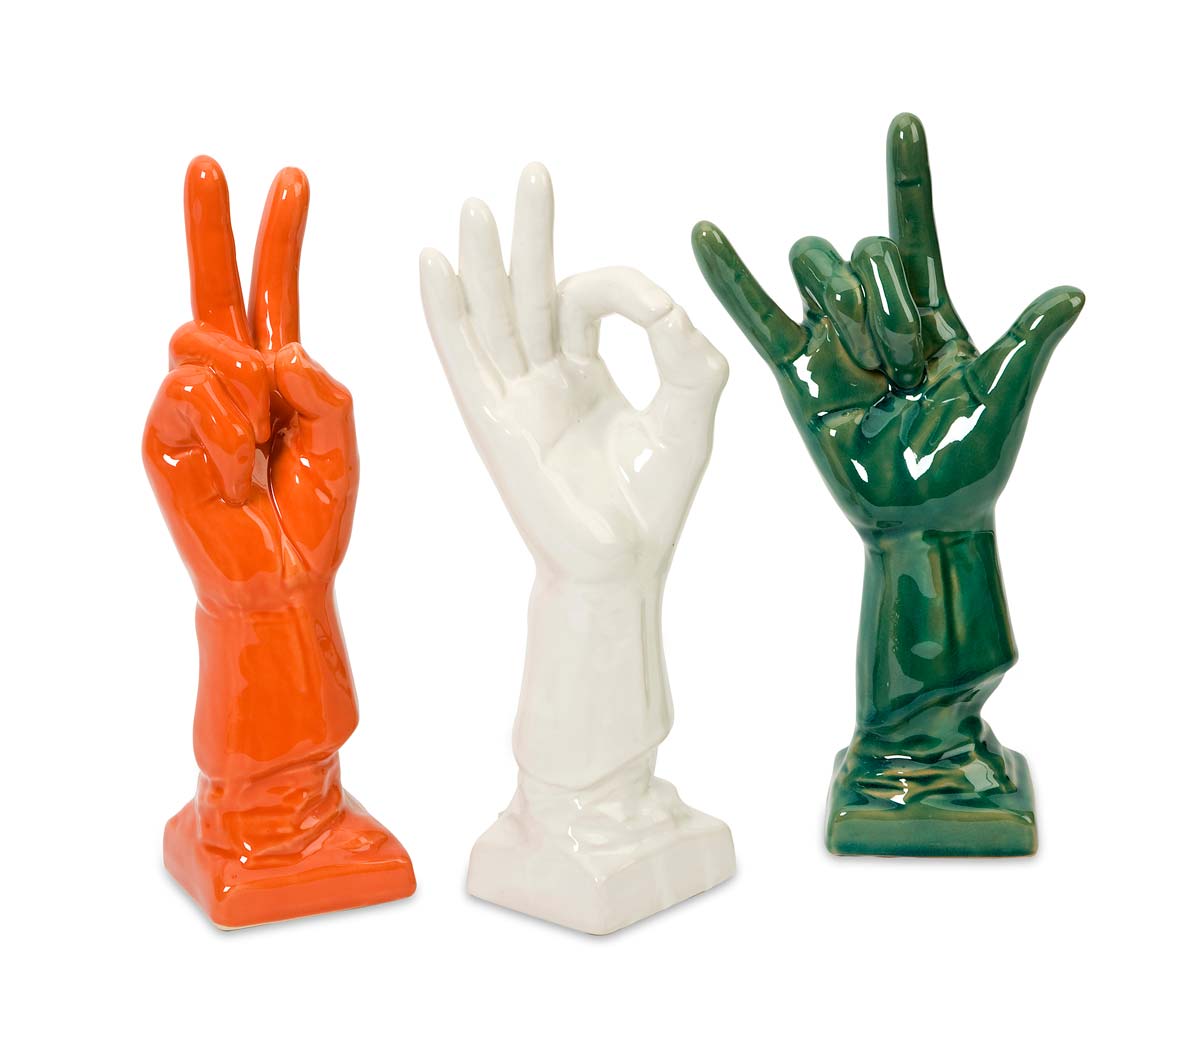 IMAX Cohen Ceramic Hands - Set of 3